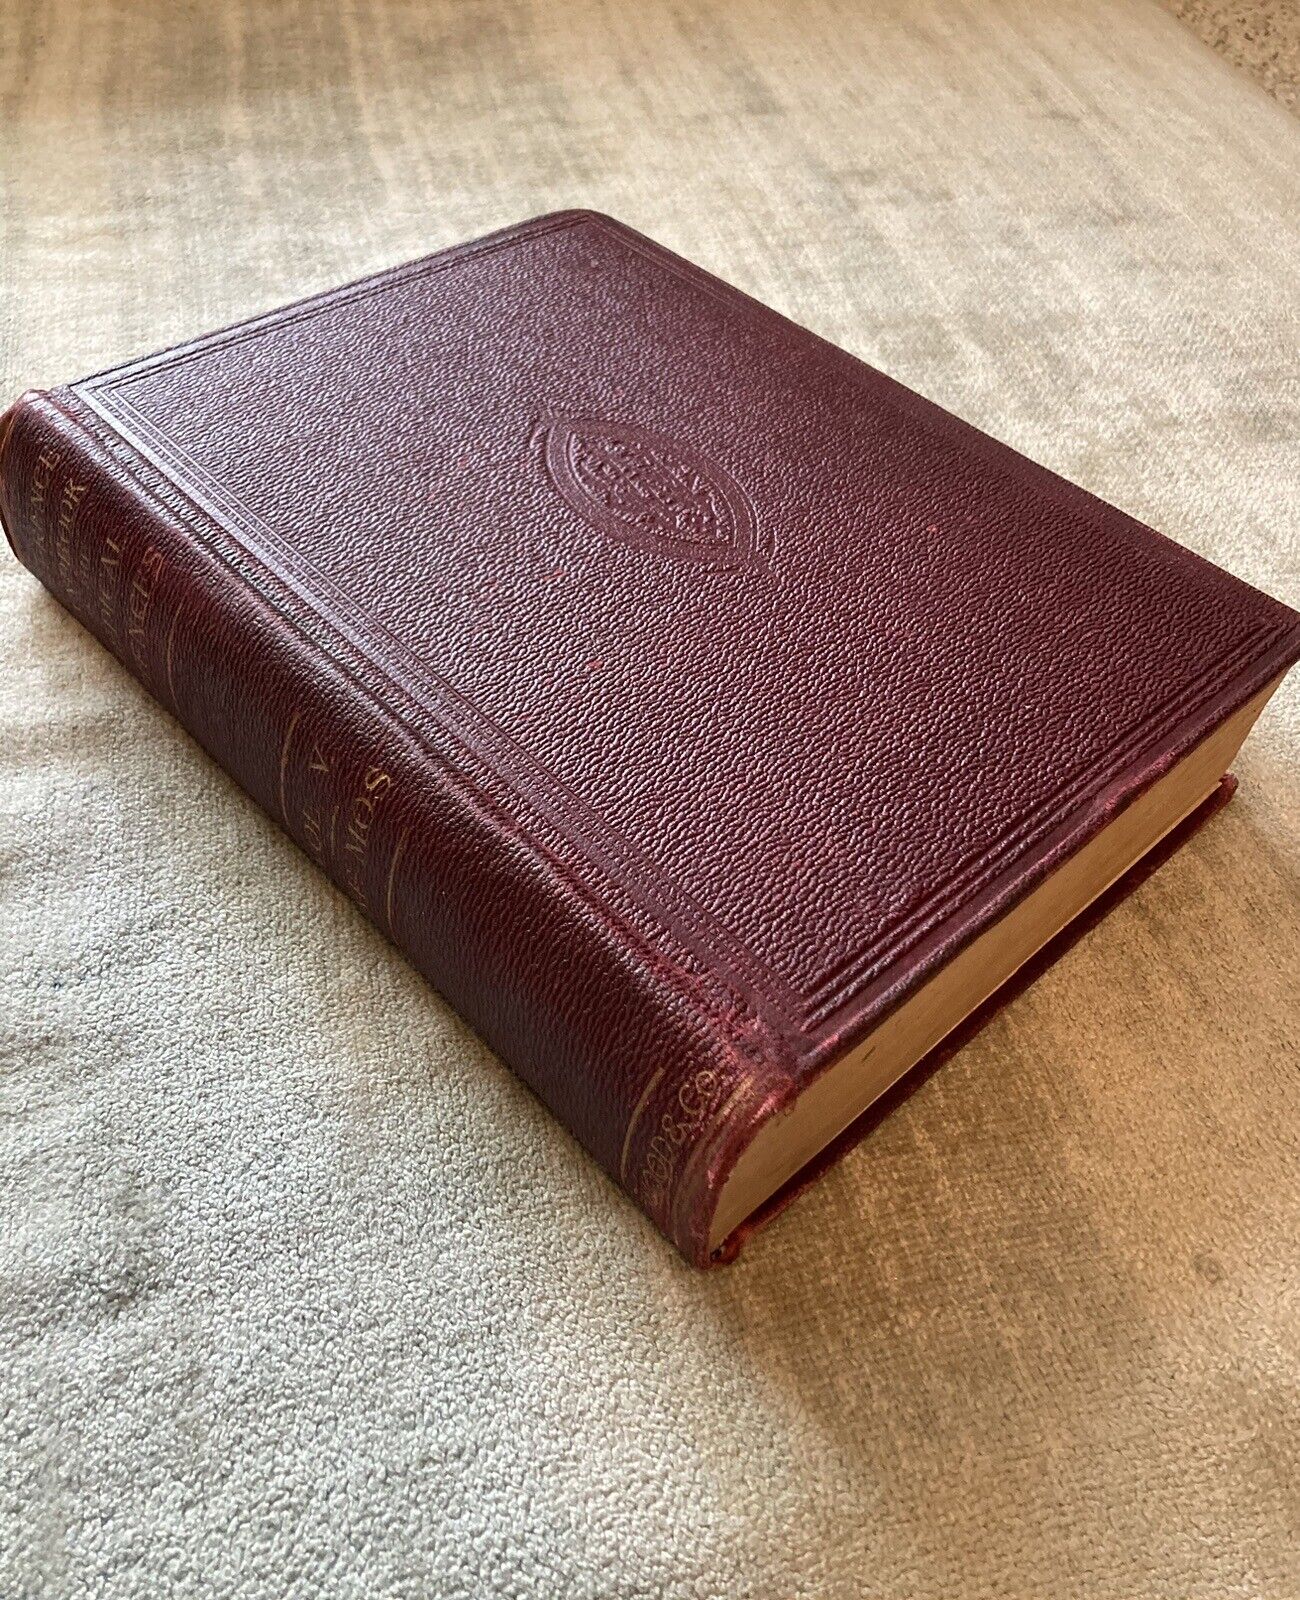 Antique Medical Reference Handbook, 1903, Albert Buck, Illustrated, Good Cond.